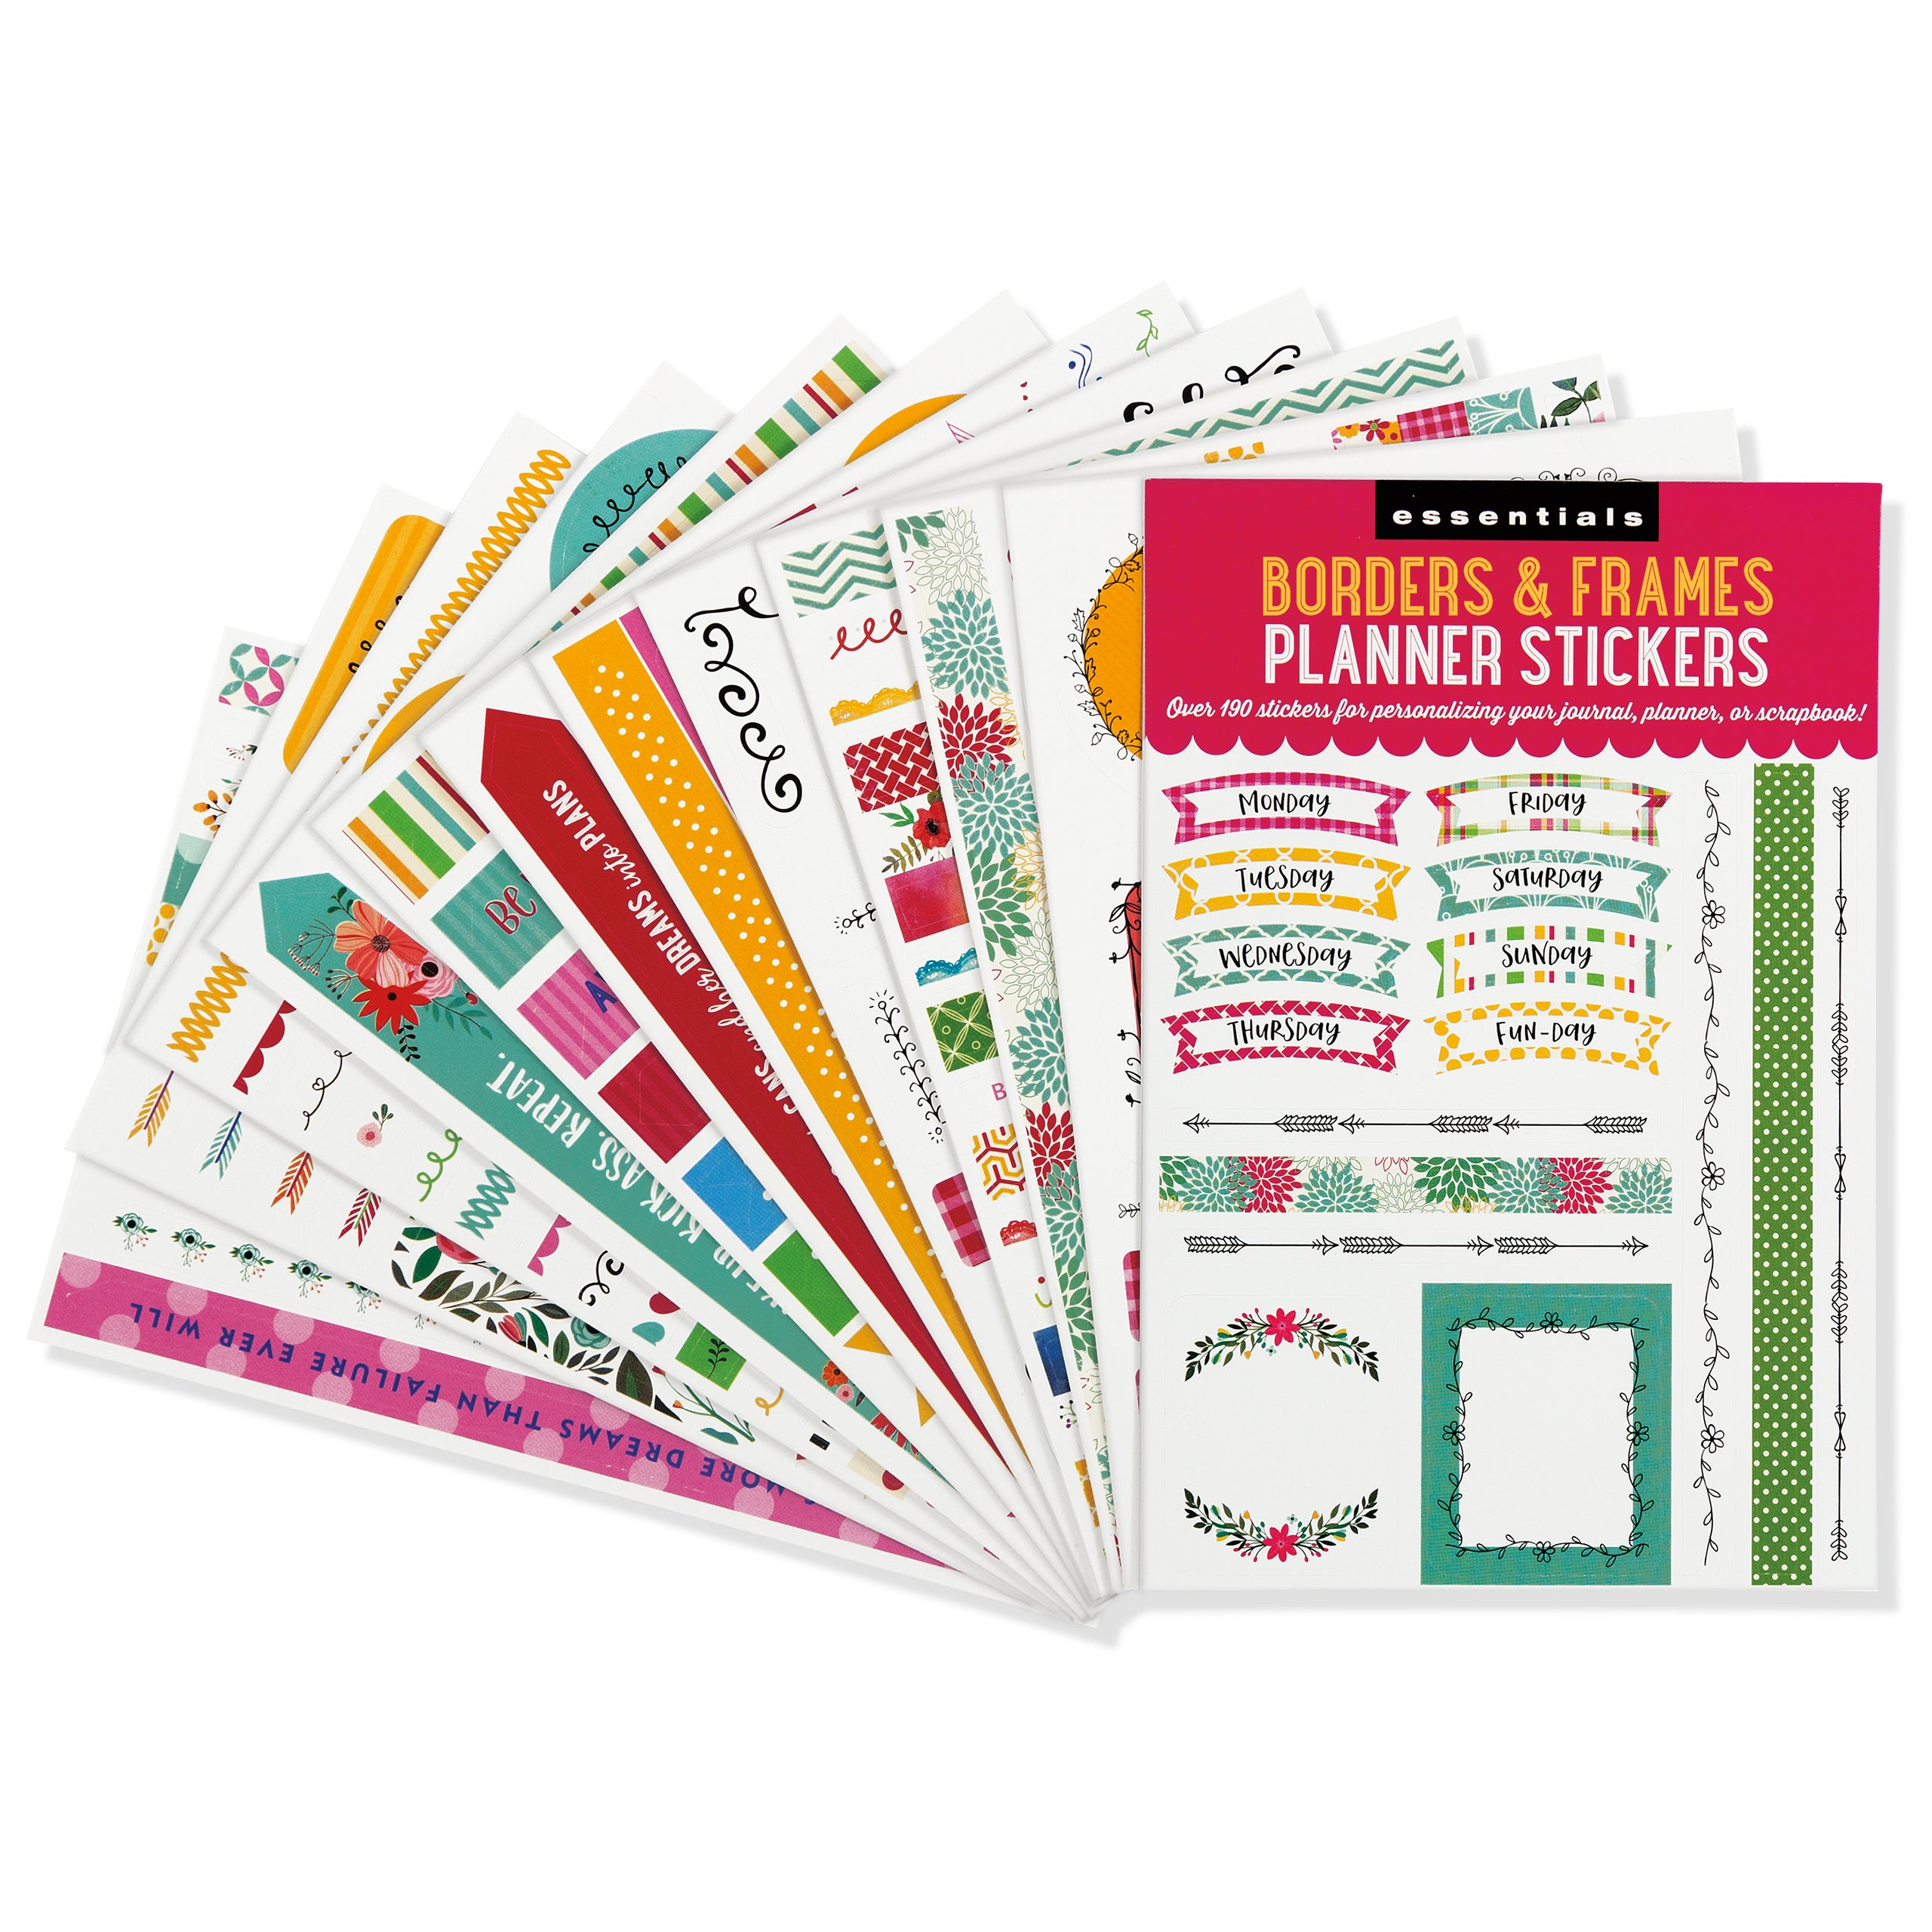 Borders & Frames Planner Stickers - 12 sheets - Paper Kooka